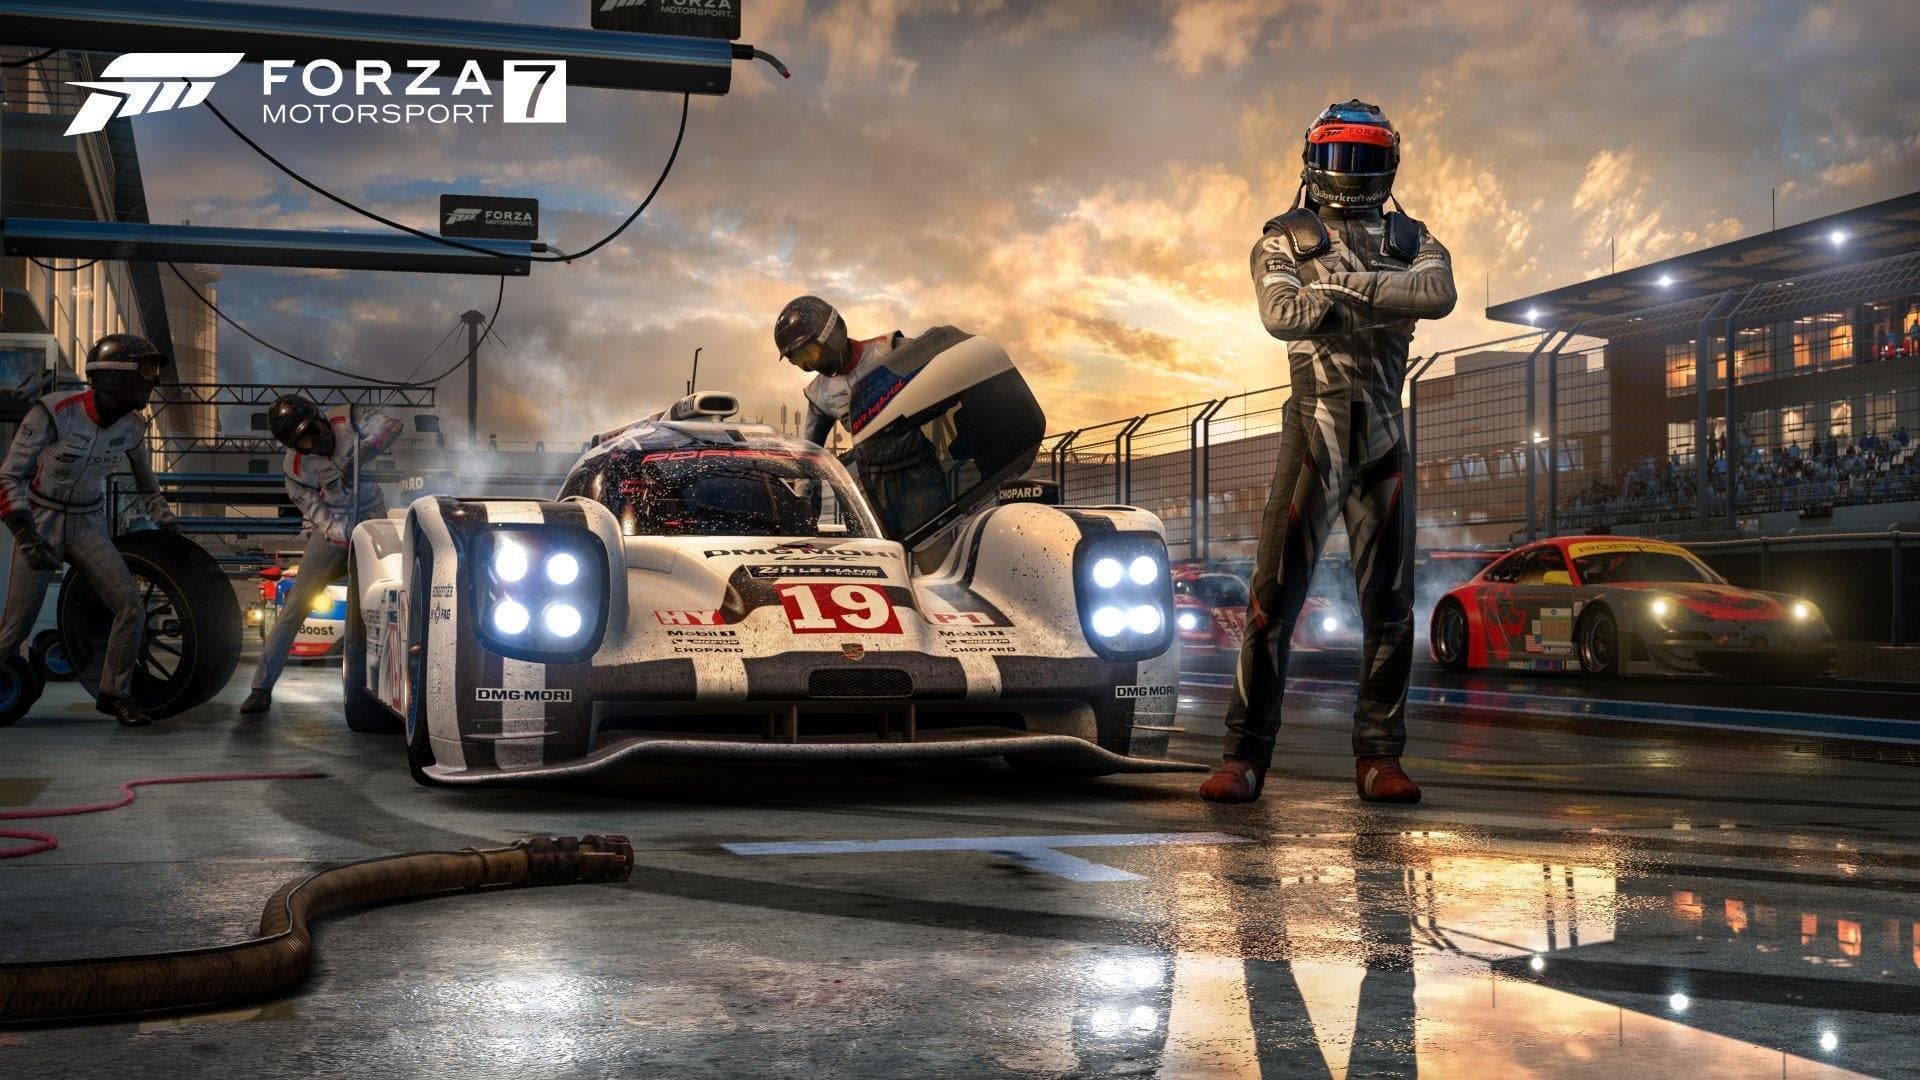 Forza Motorsport 7 - למחשב ולאקסבוקס - EXON - גיימינג ותוכנות - משחקים ותוכנות למחשב ולאקס בוקס!